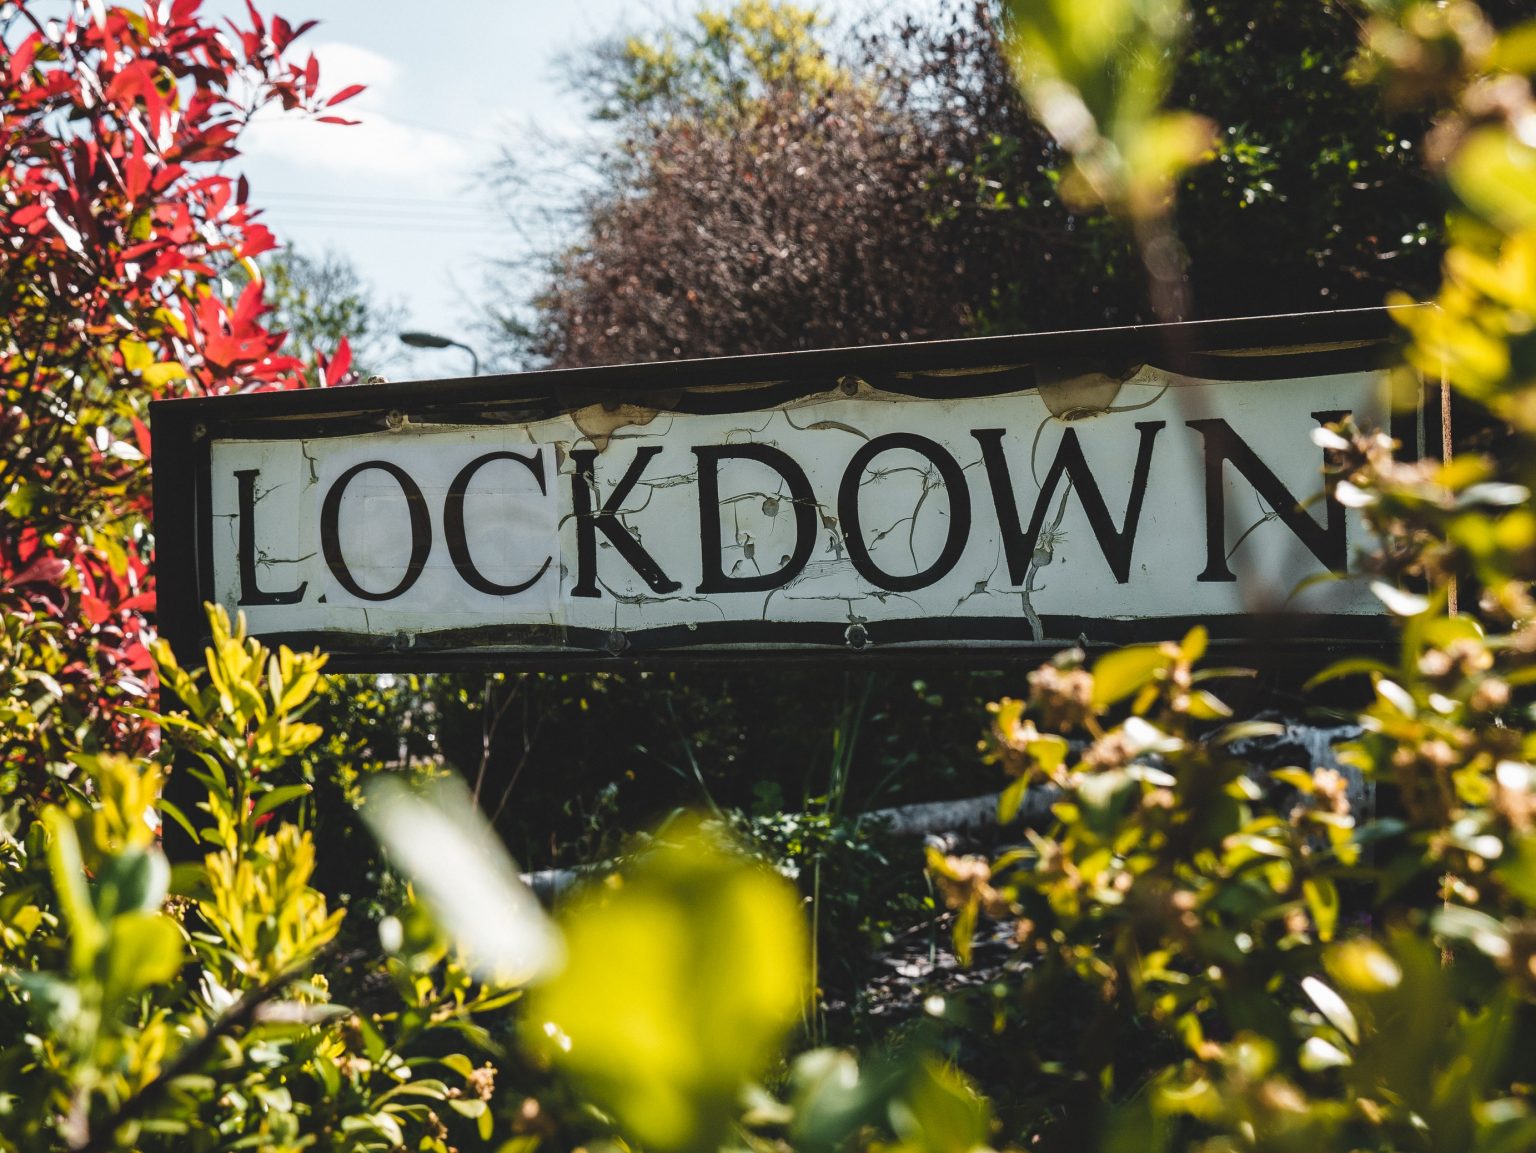 Lockdown sign